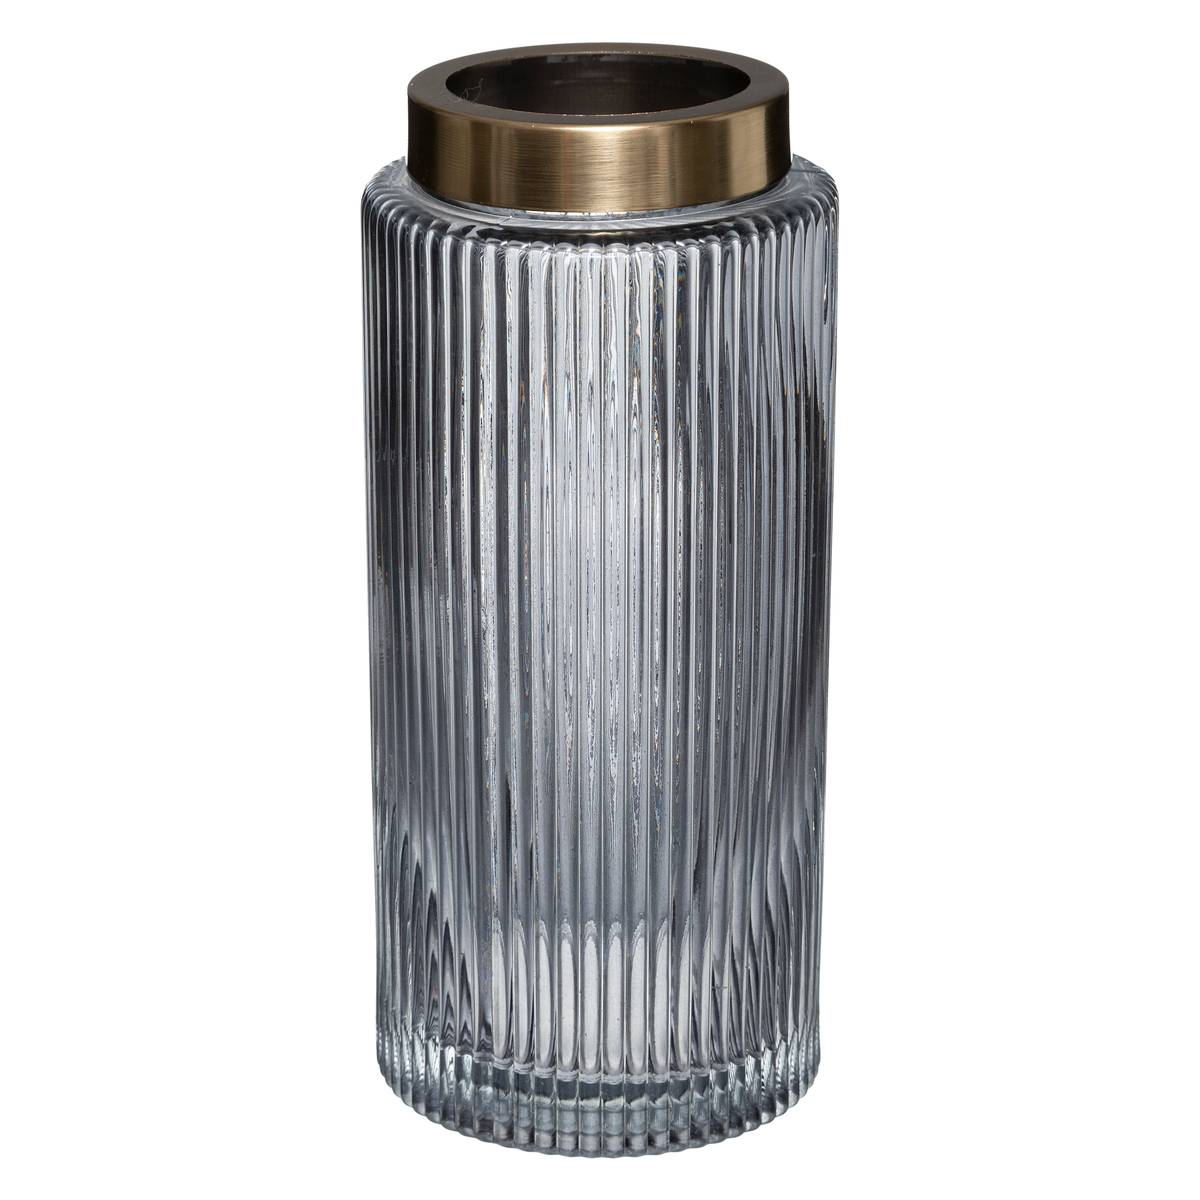 Laura, Glass Vase 26cm- Grey